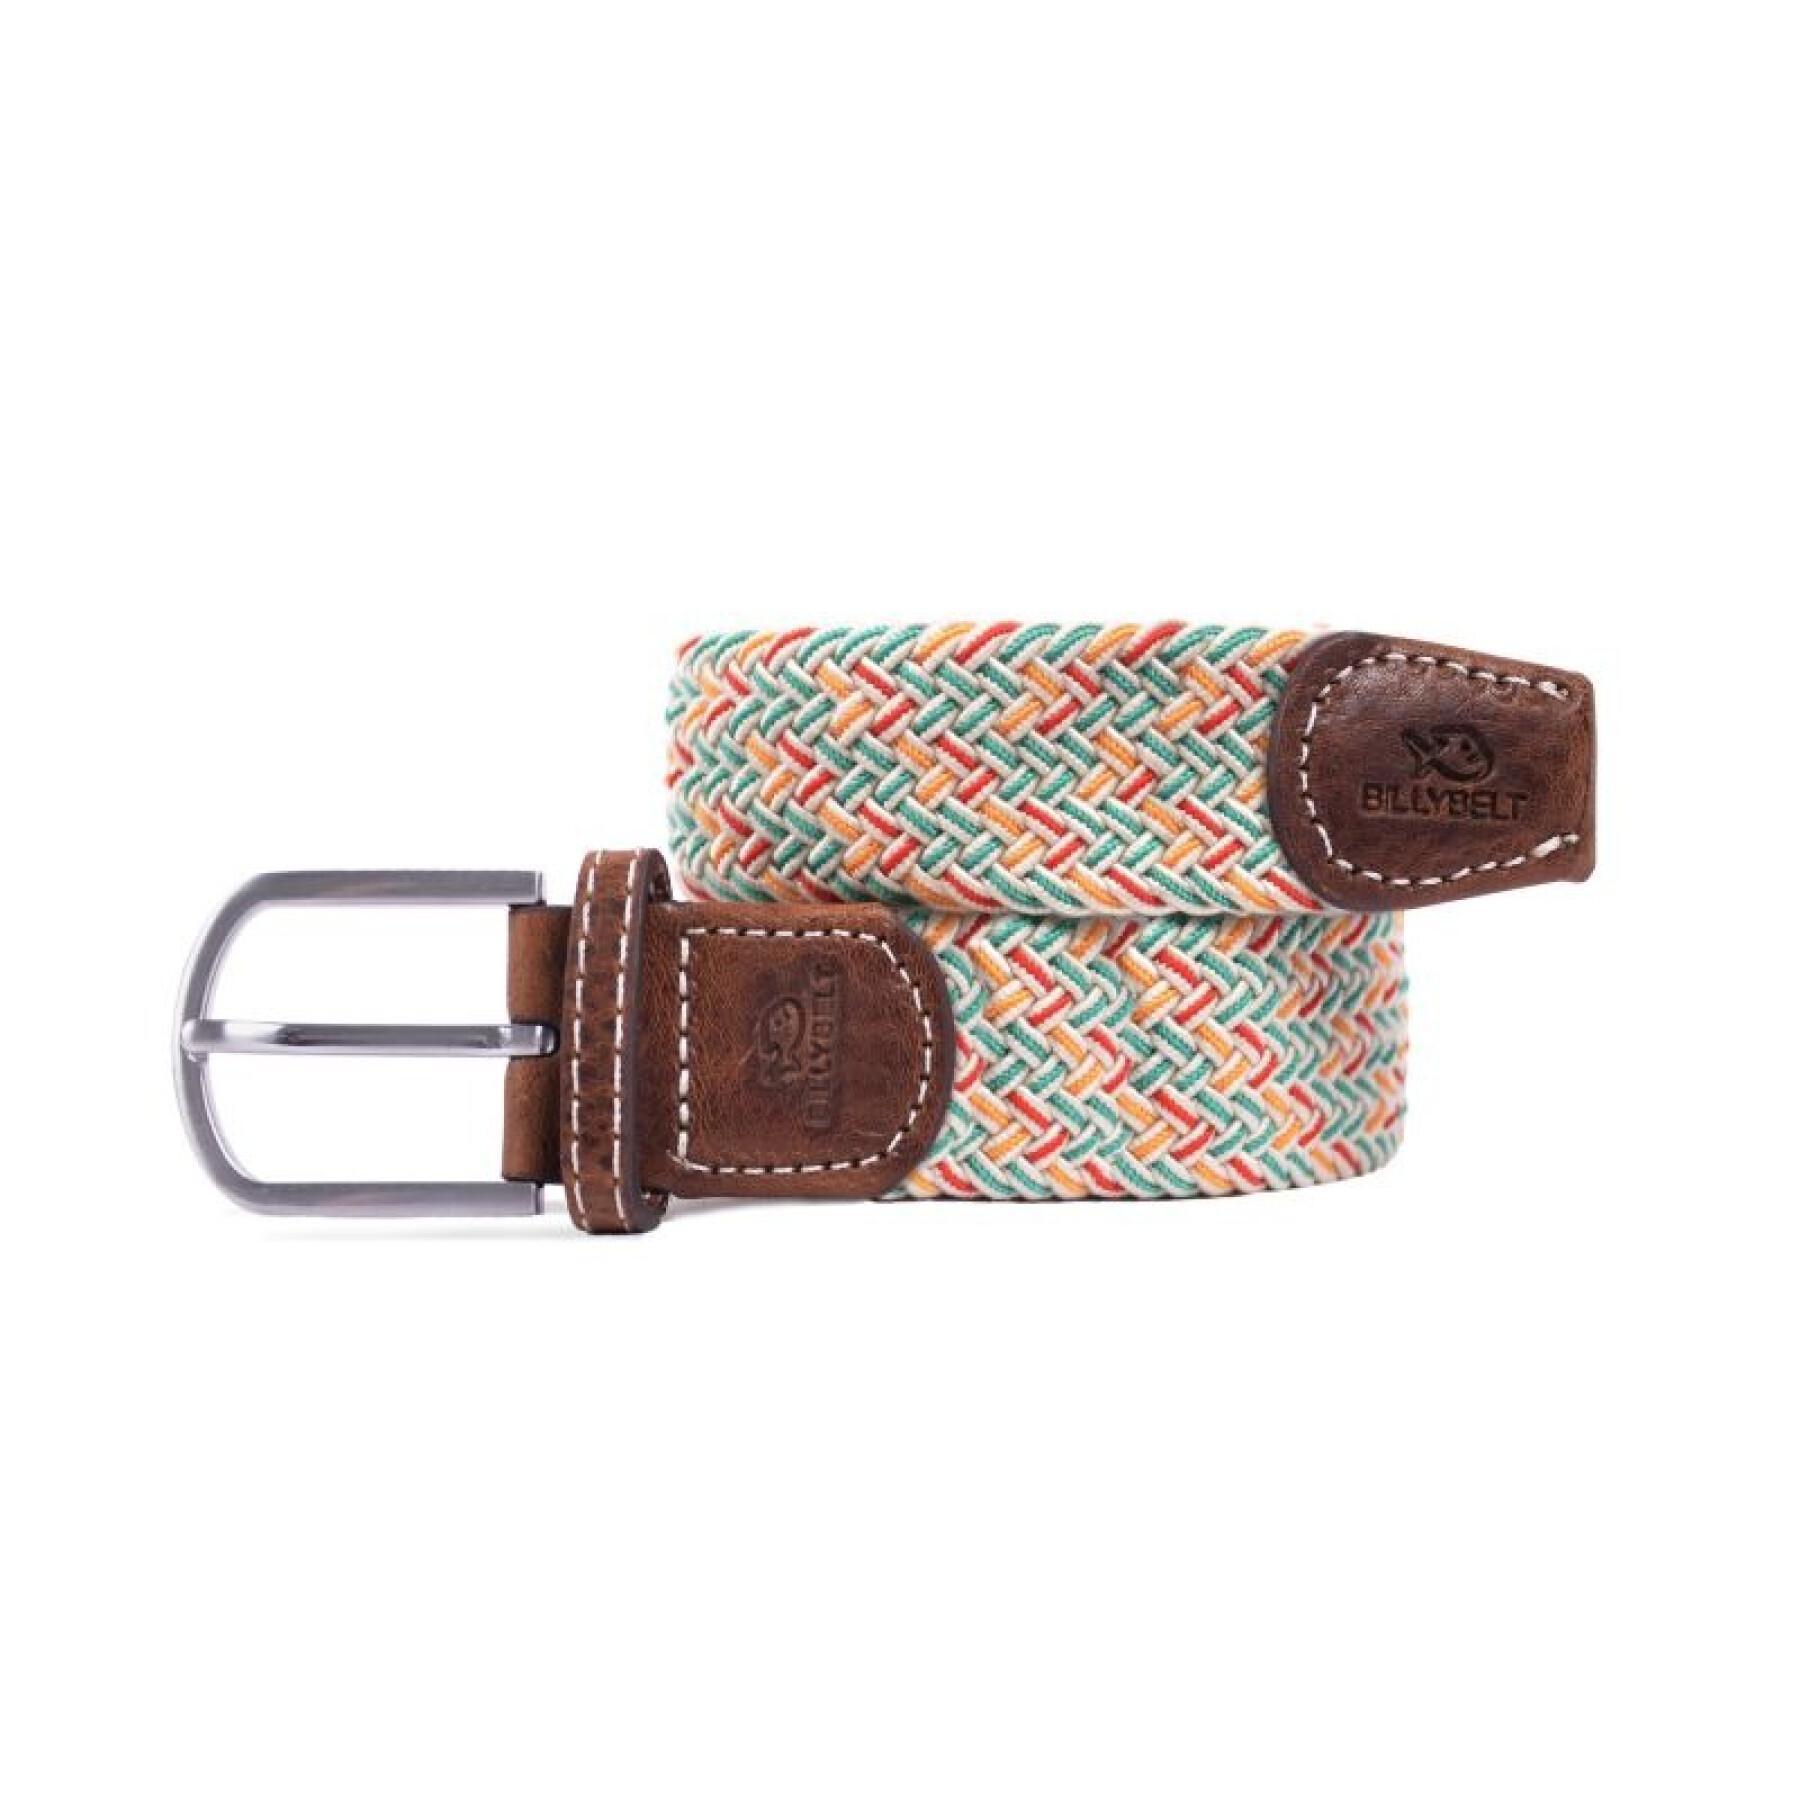 Elastic braided belt Billybelt La Burano